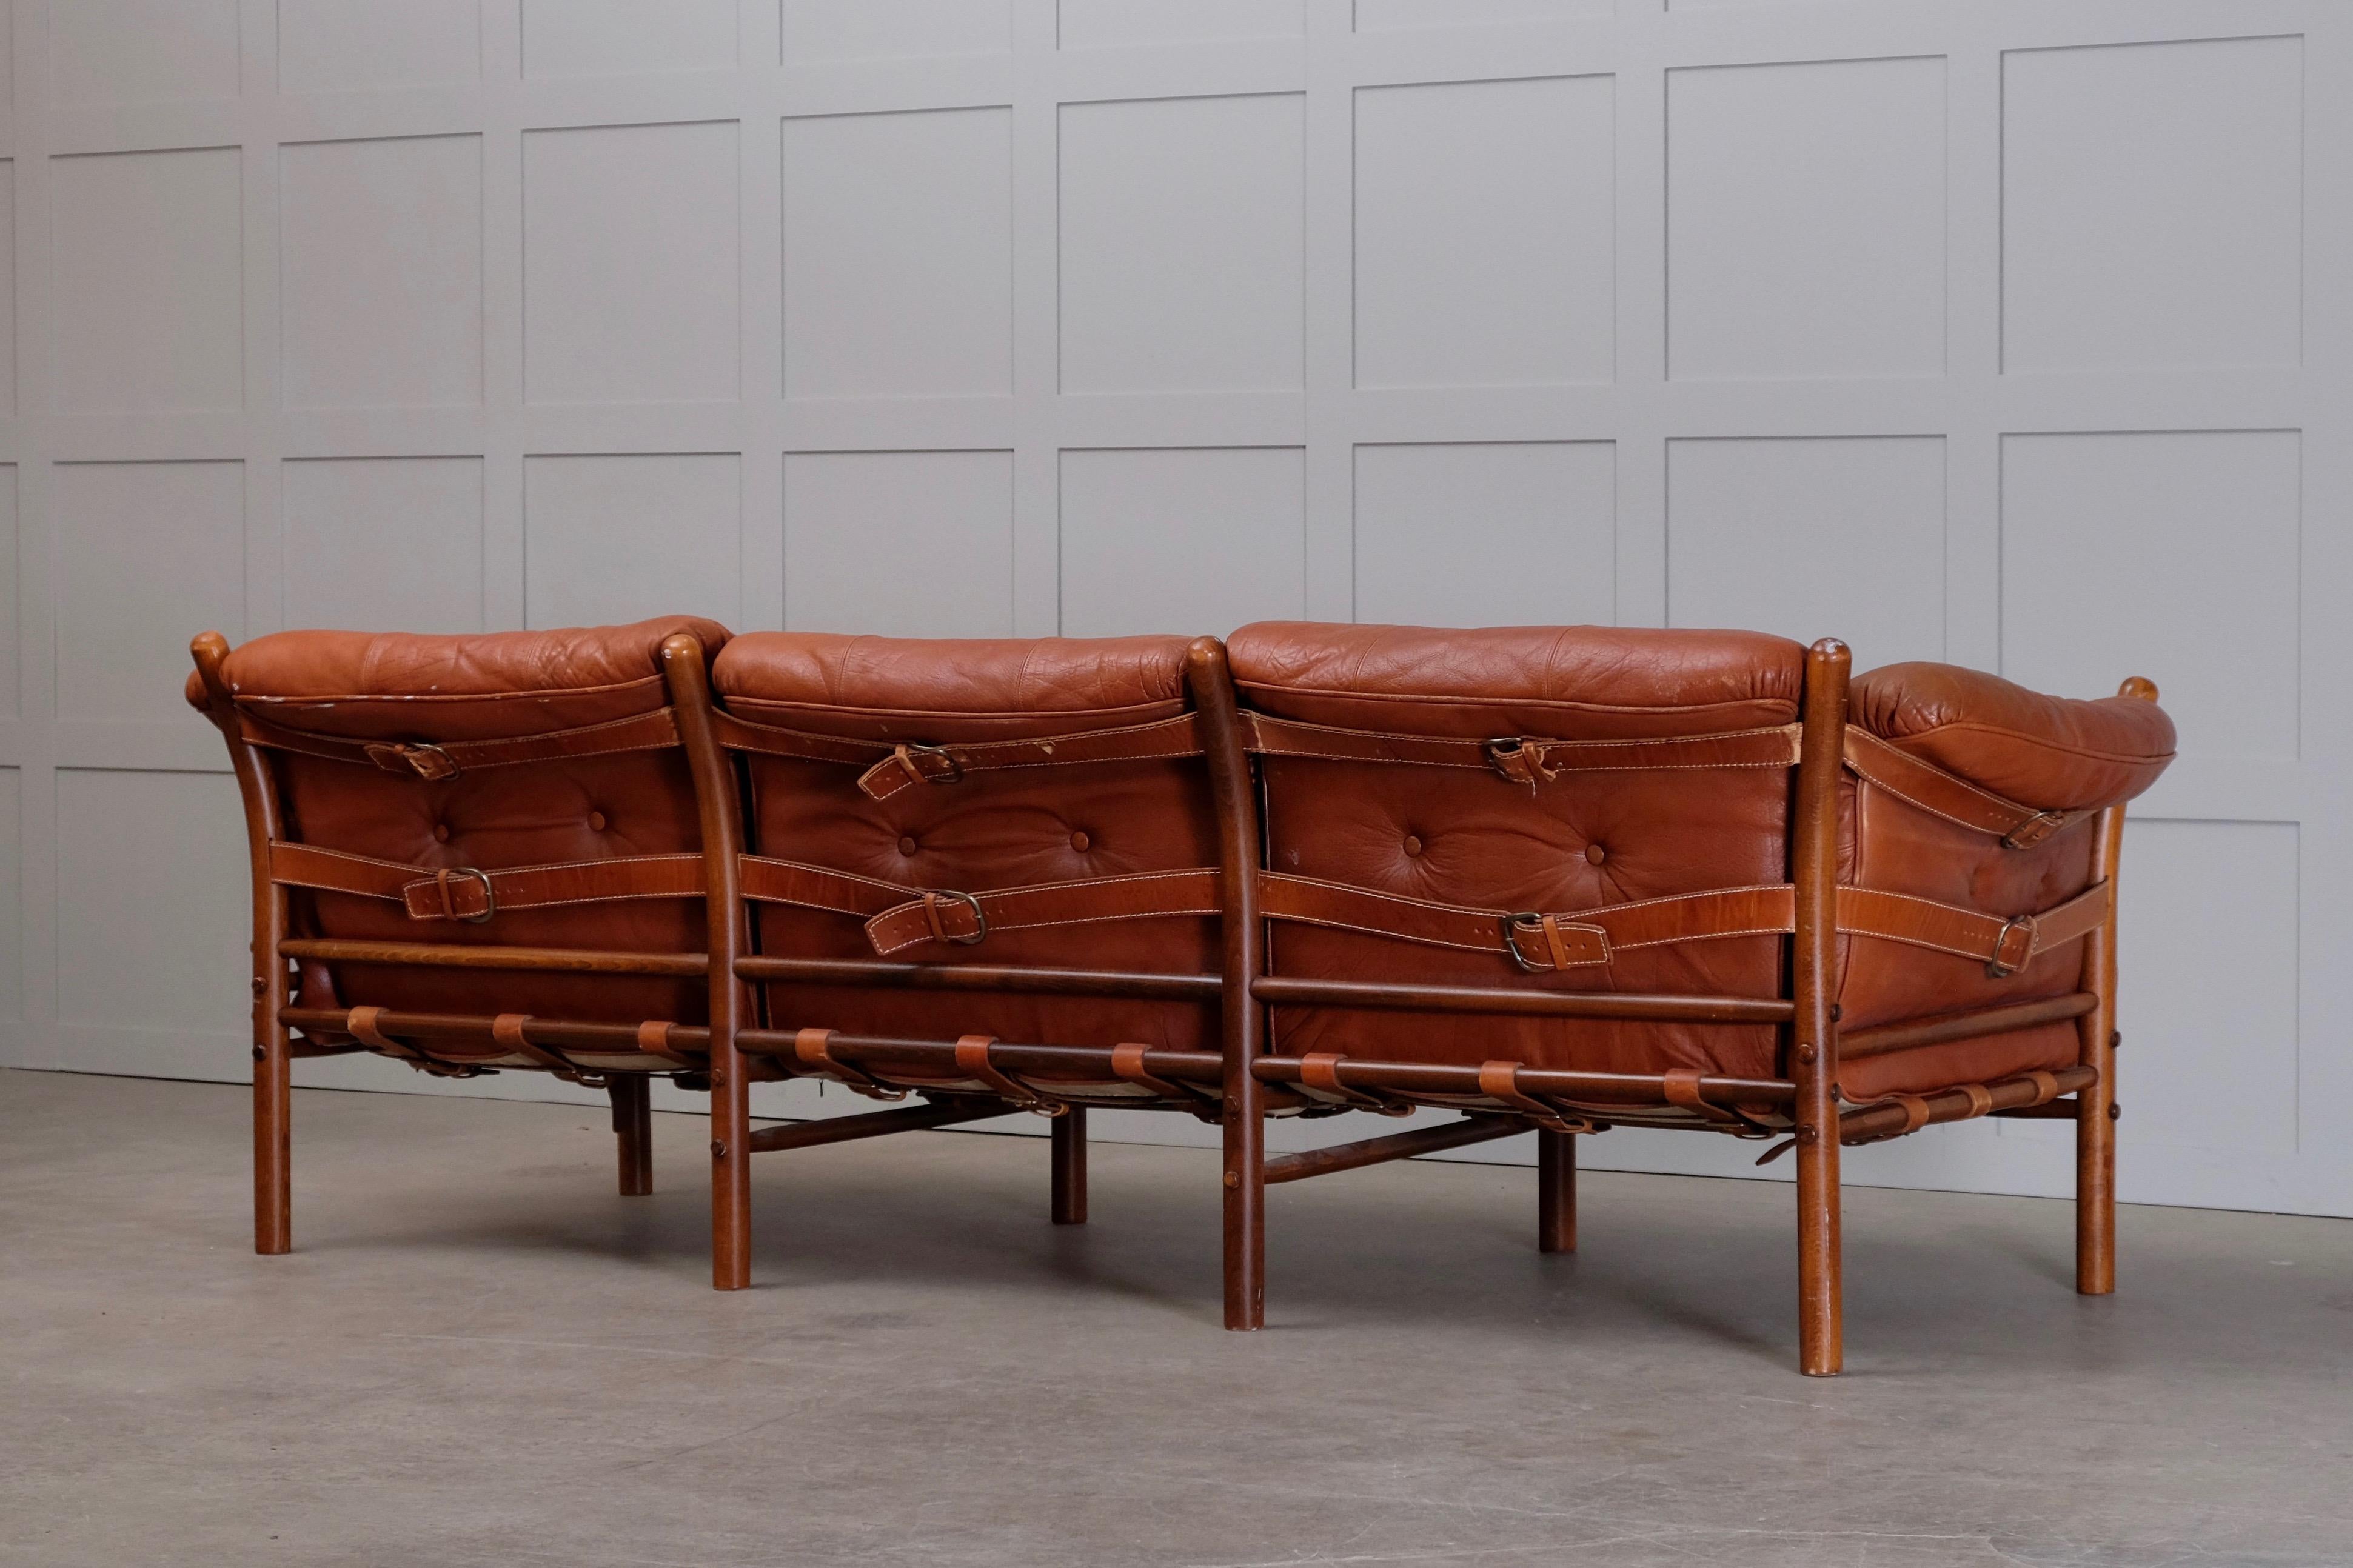 Scandinavian Modern Arne Norell Leather Sofa, Model Indra, 1960s For Sale